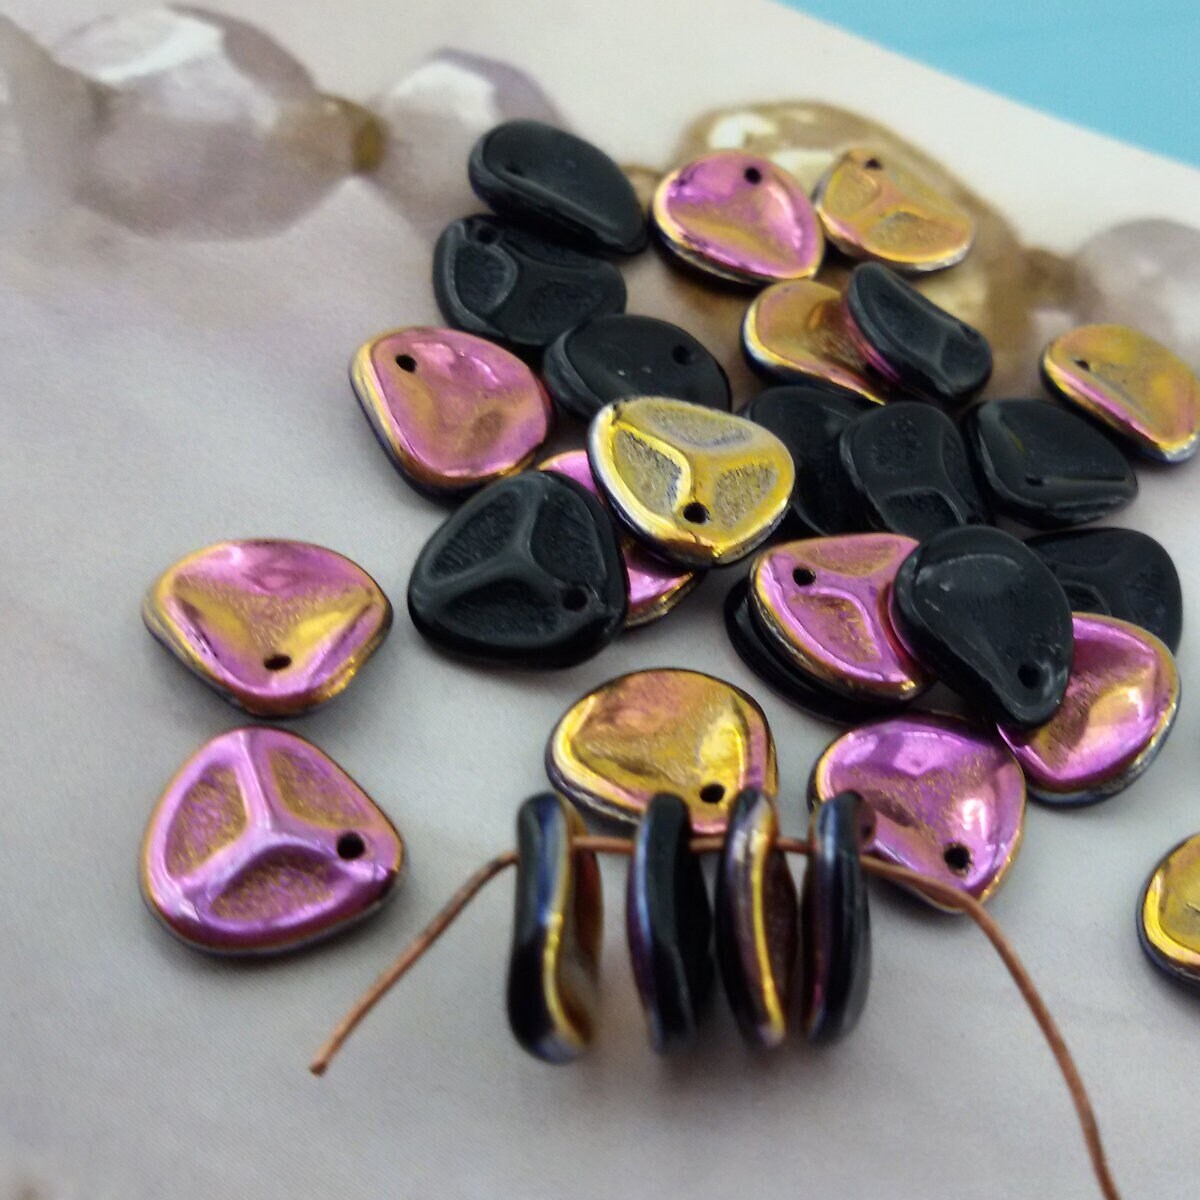 4812mm Round Beads Purple & Gold